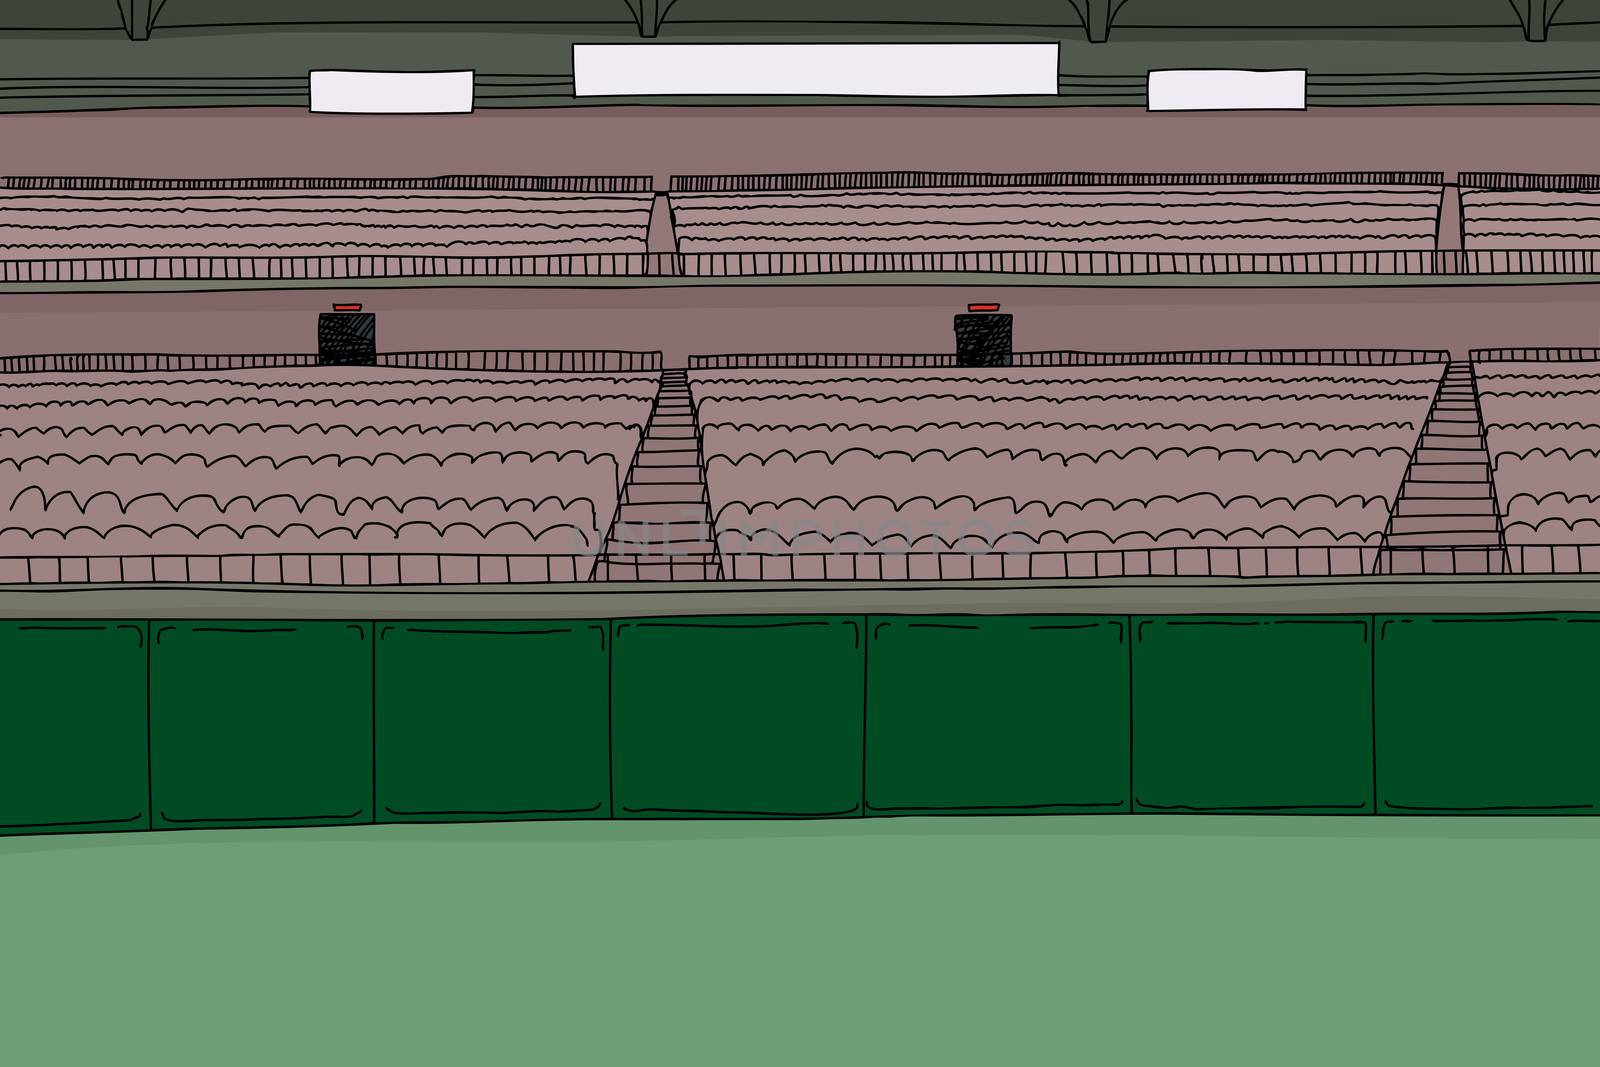 Large Stadium with Scoreboard by TheBlackRhino